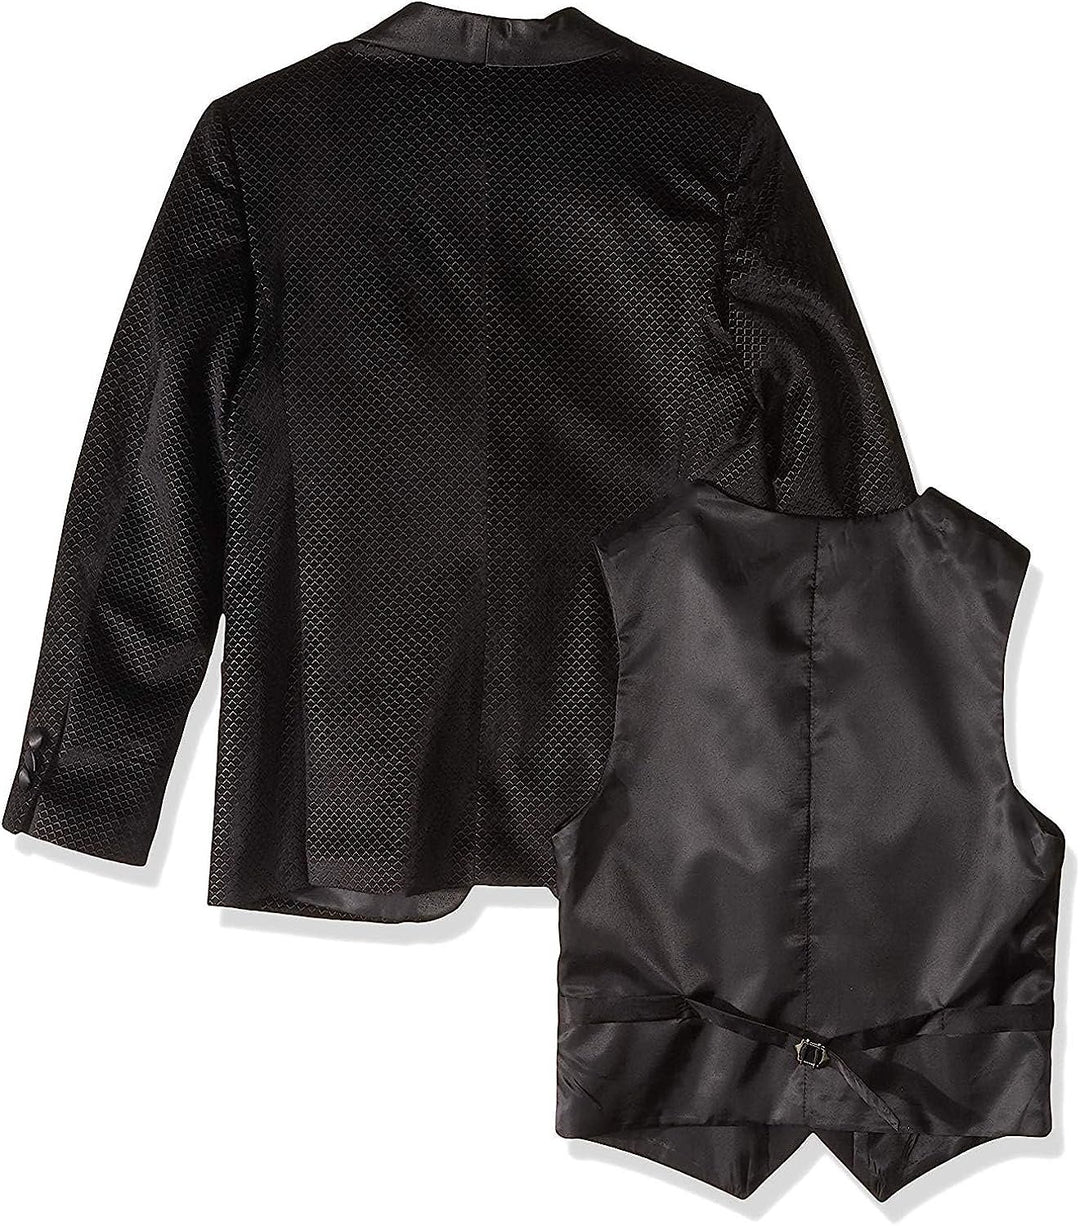 AXNY Boy's Slim Fit 3-Piece (Jacket Vest Trousers) Satin Shawl Collar Formal Textured Tuxedo Suit Set